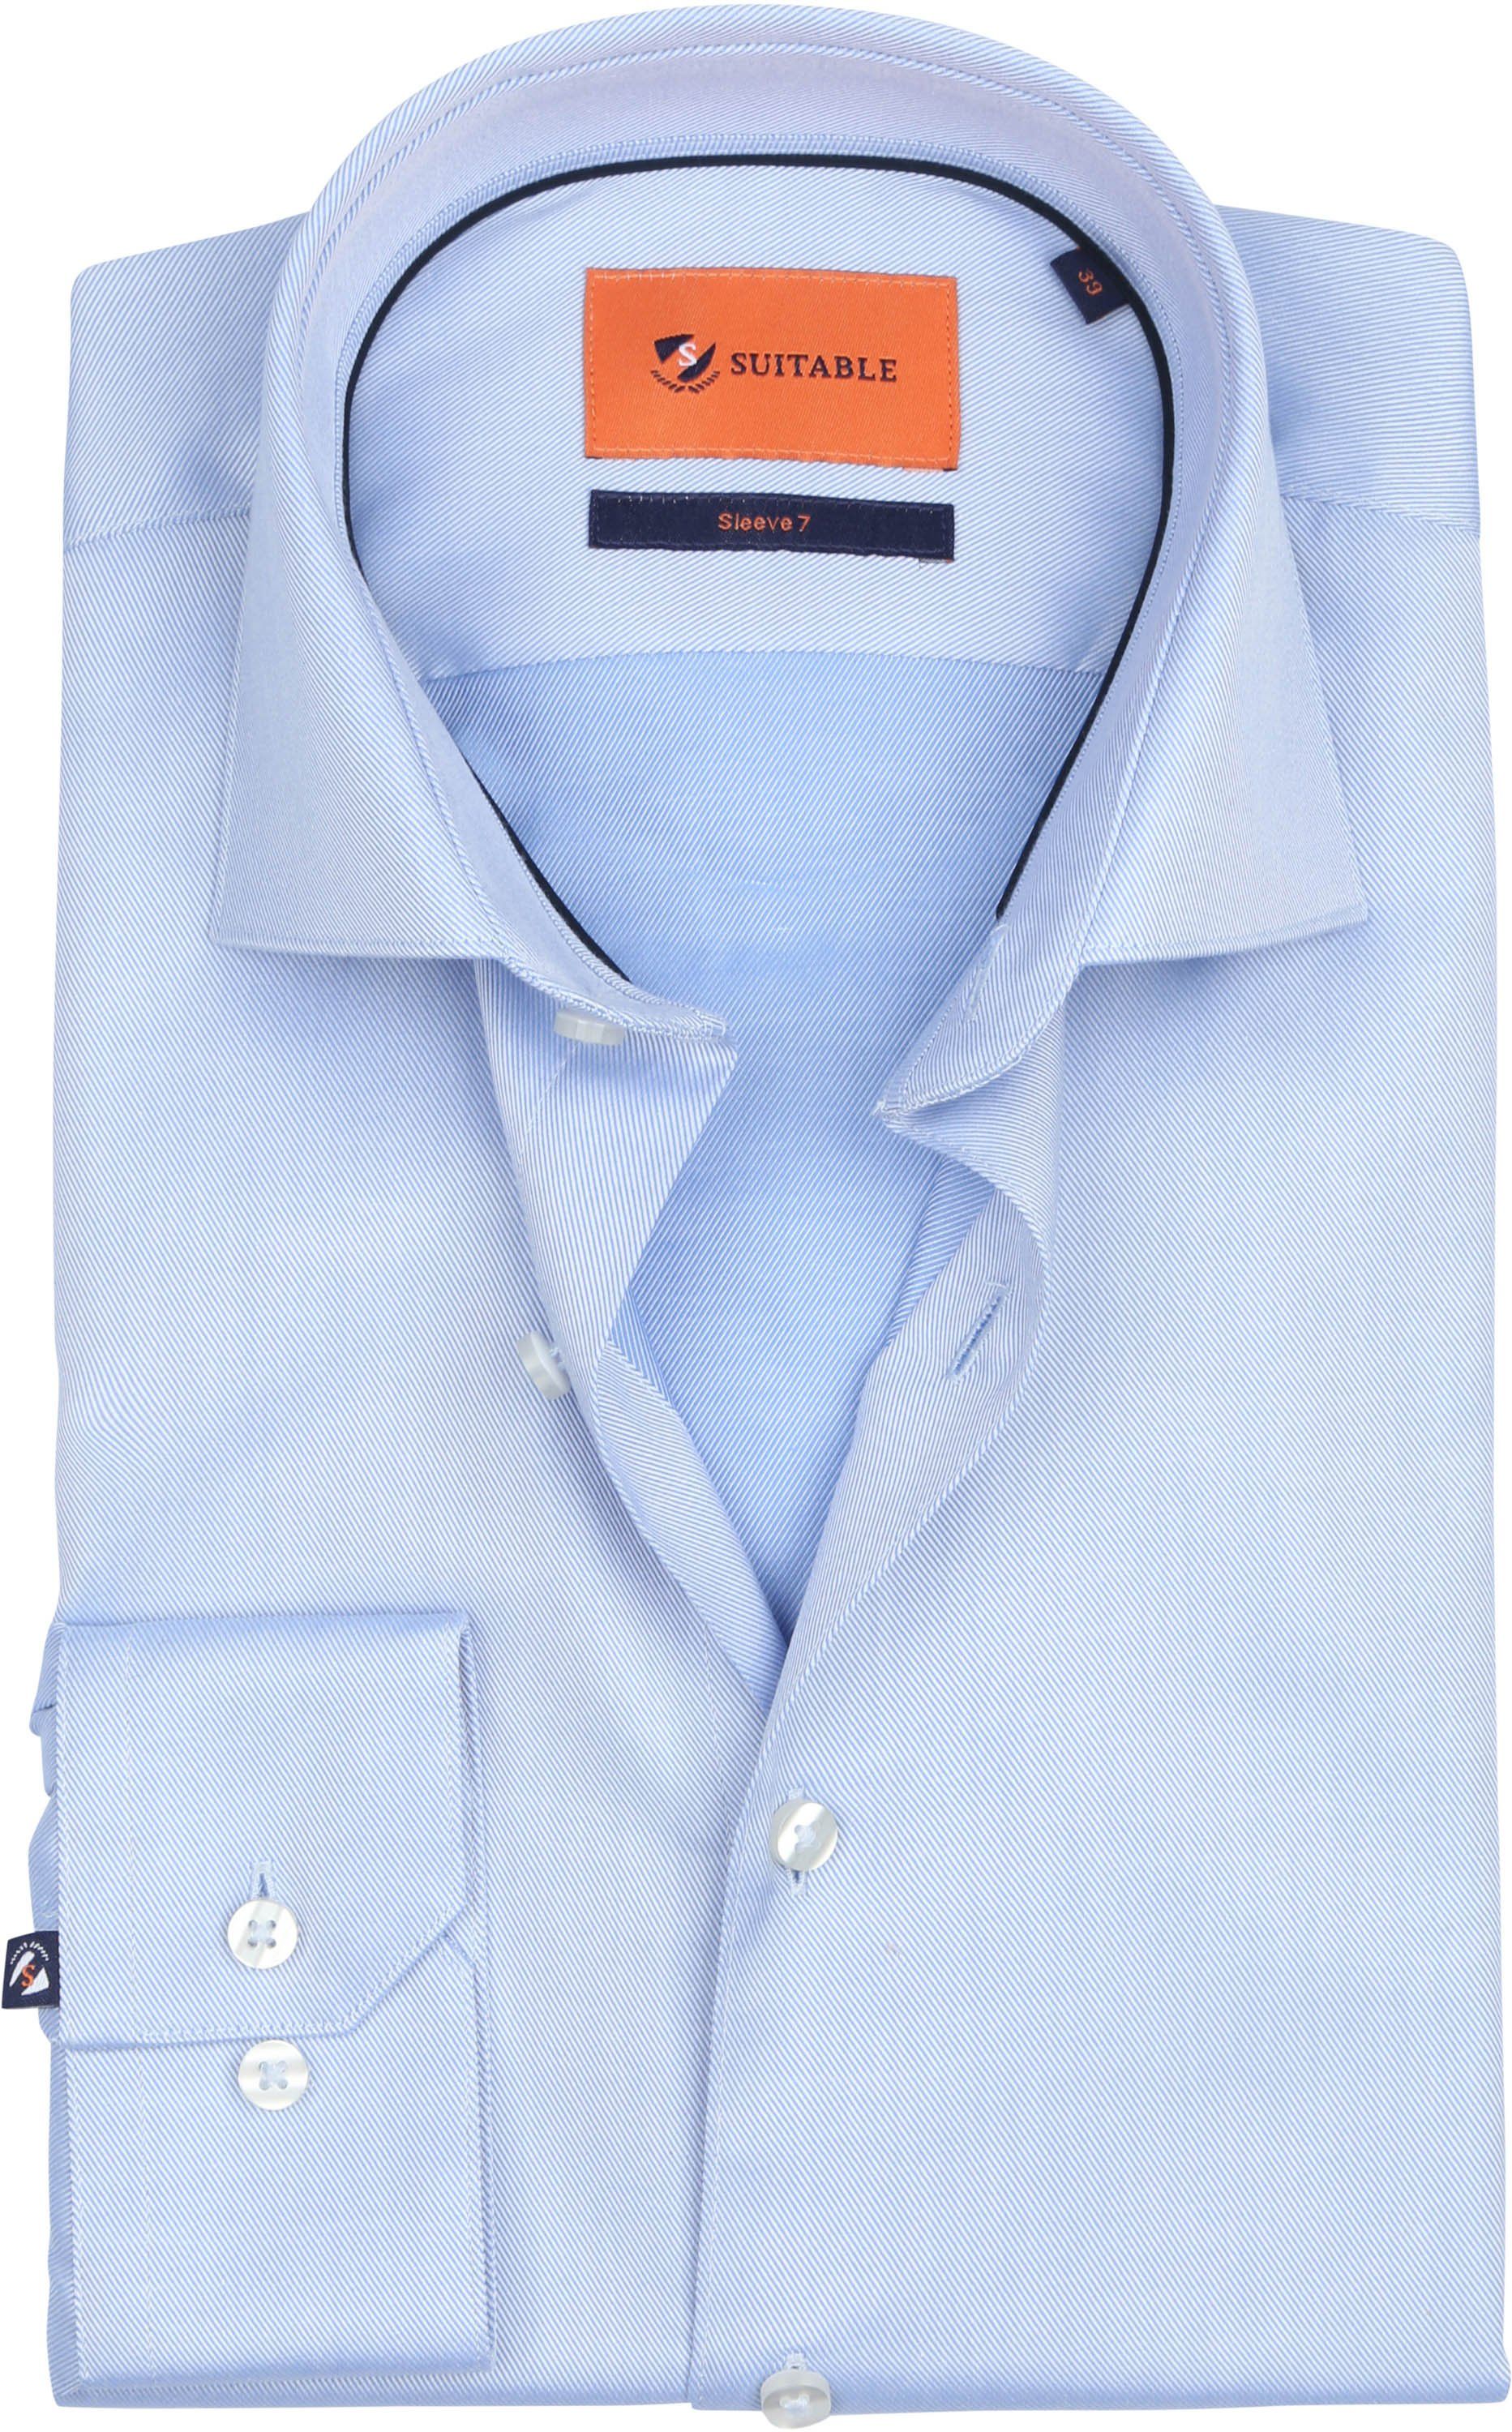 Suitable Shirt Twill Sleeve 7 Light Light blue Blue size 15 1/2